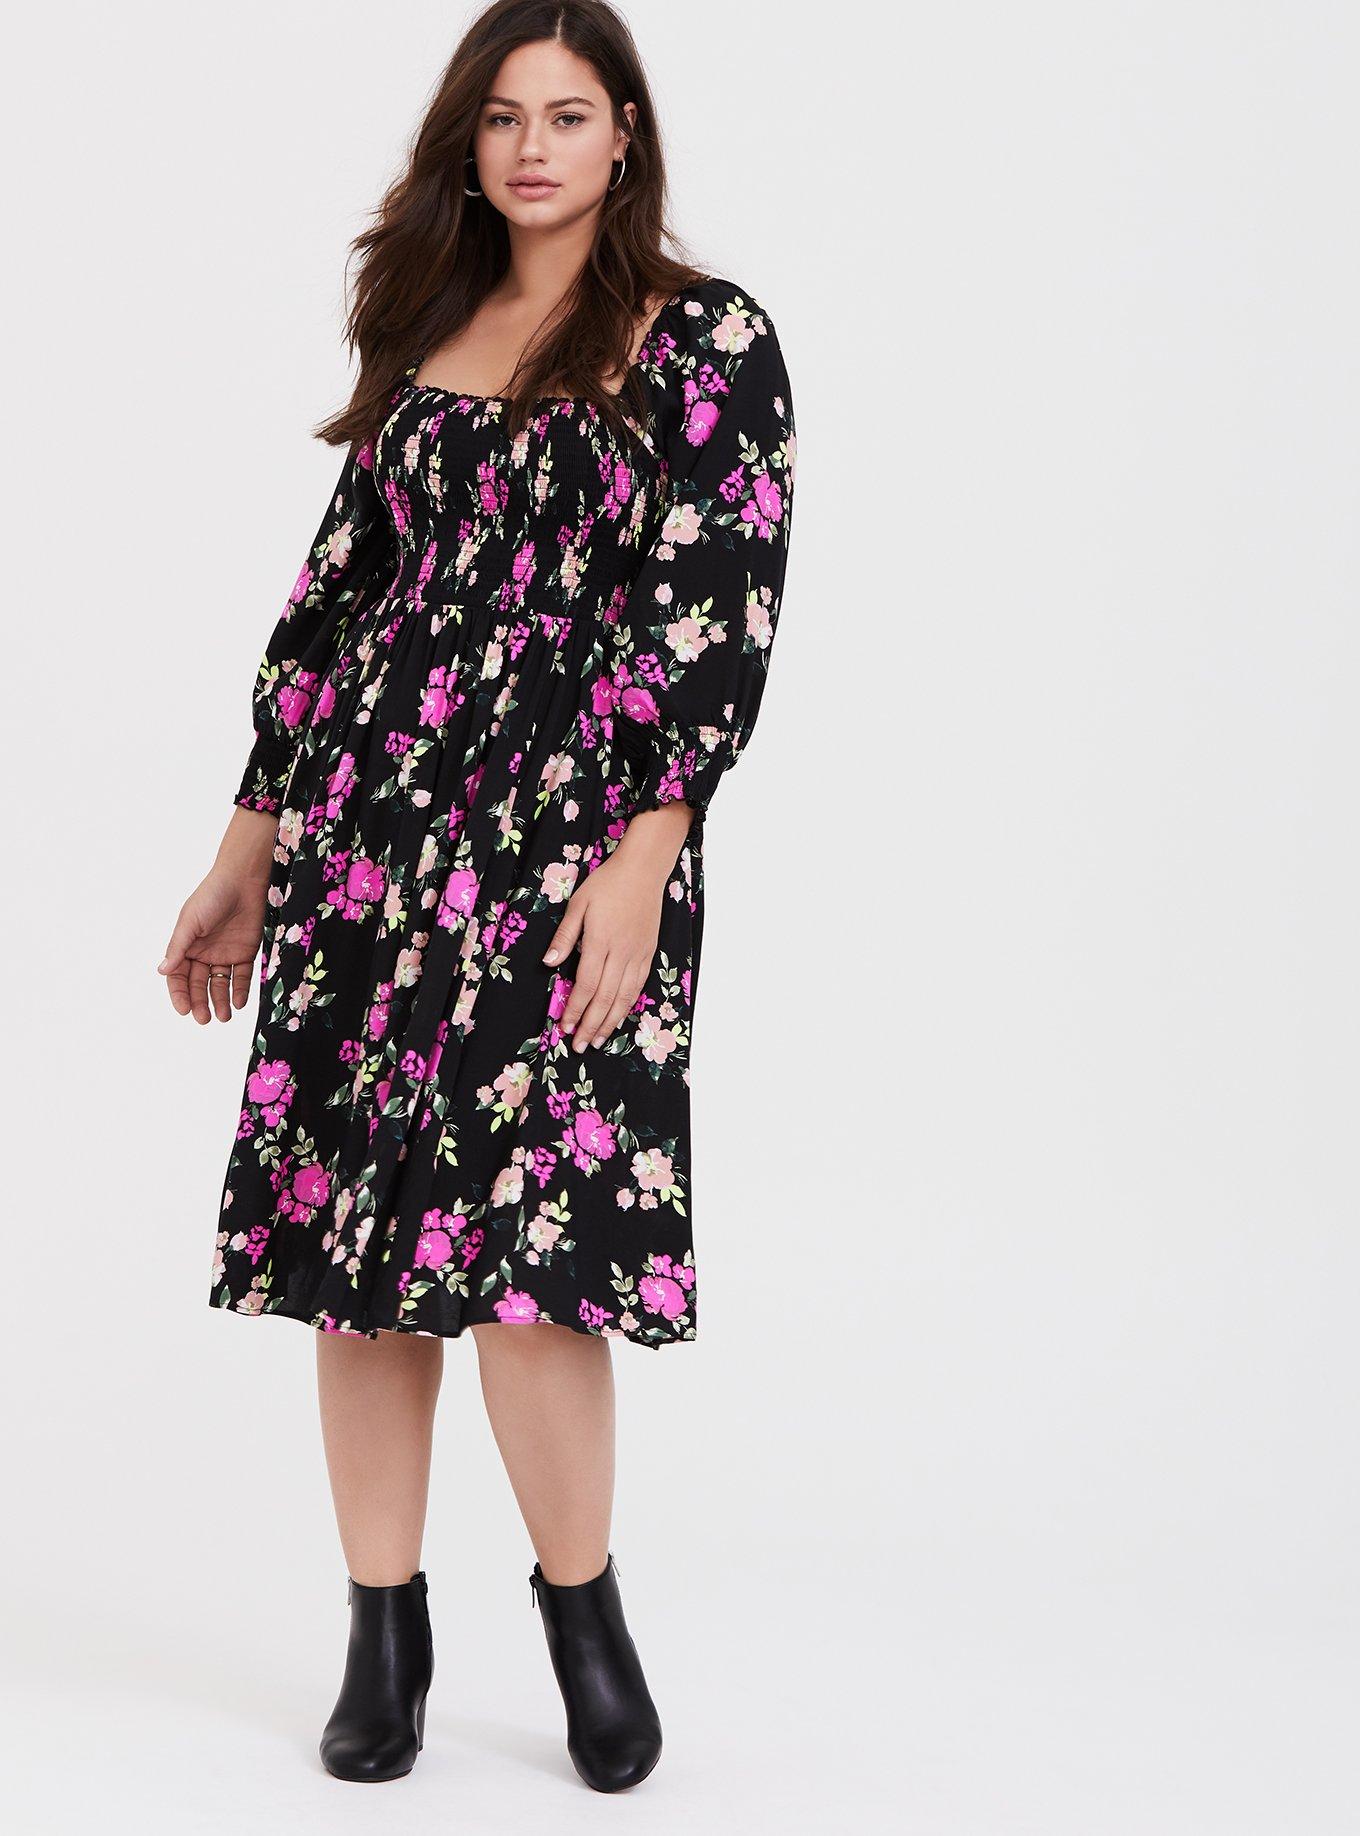 Plus Size - Black Floral Challis Smocked Dress - Torrid